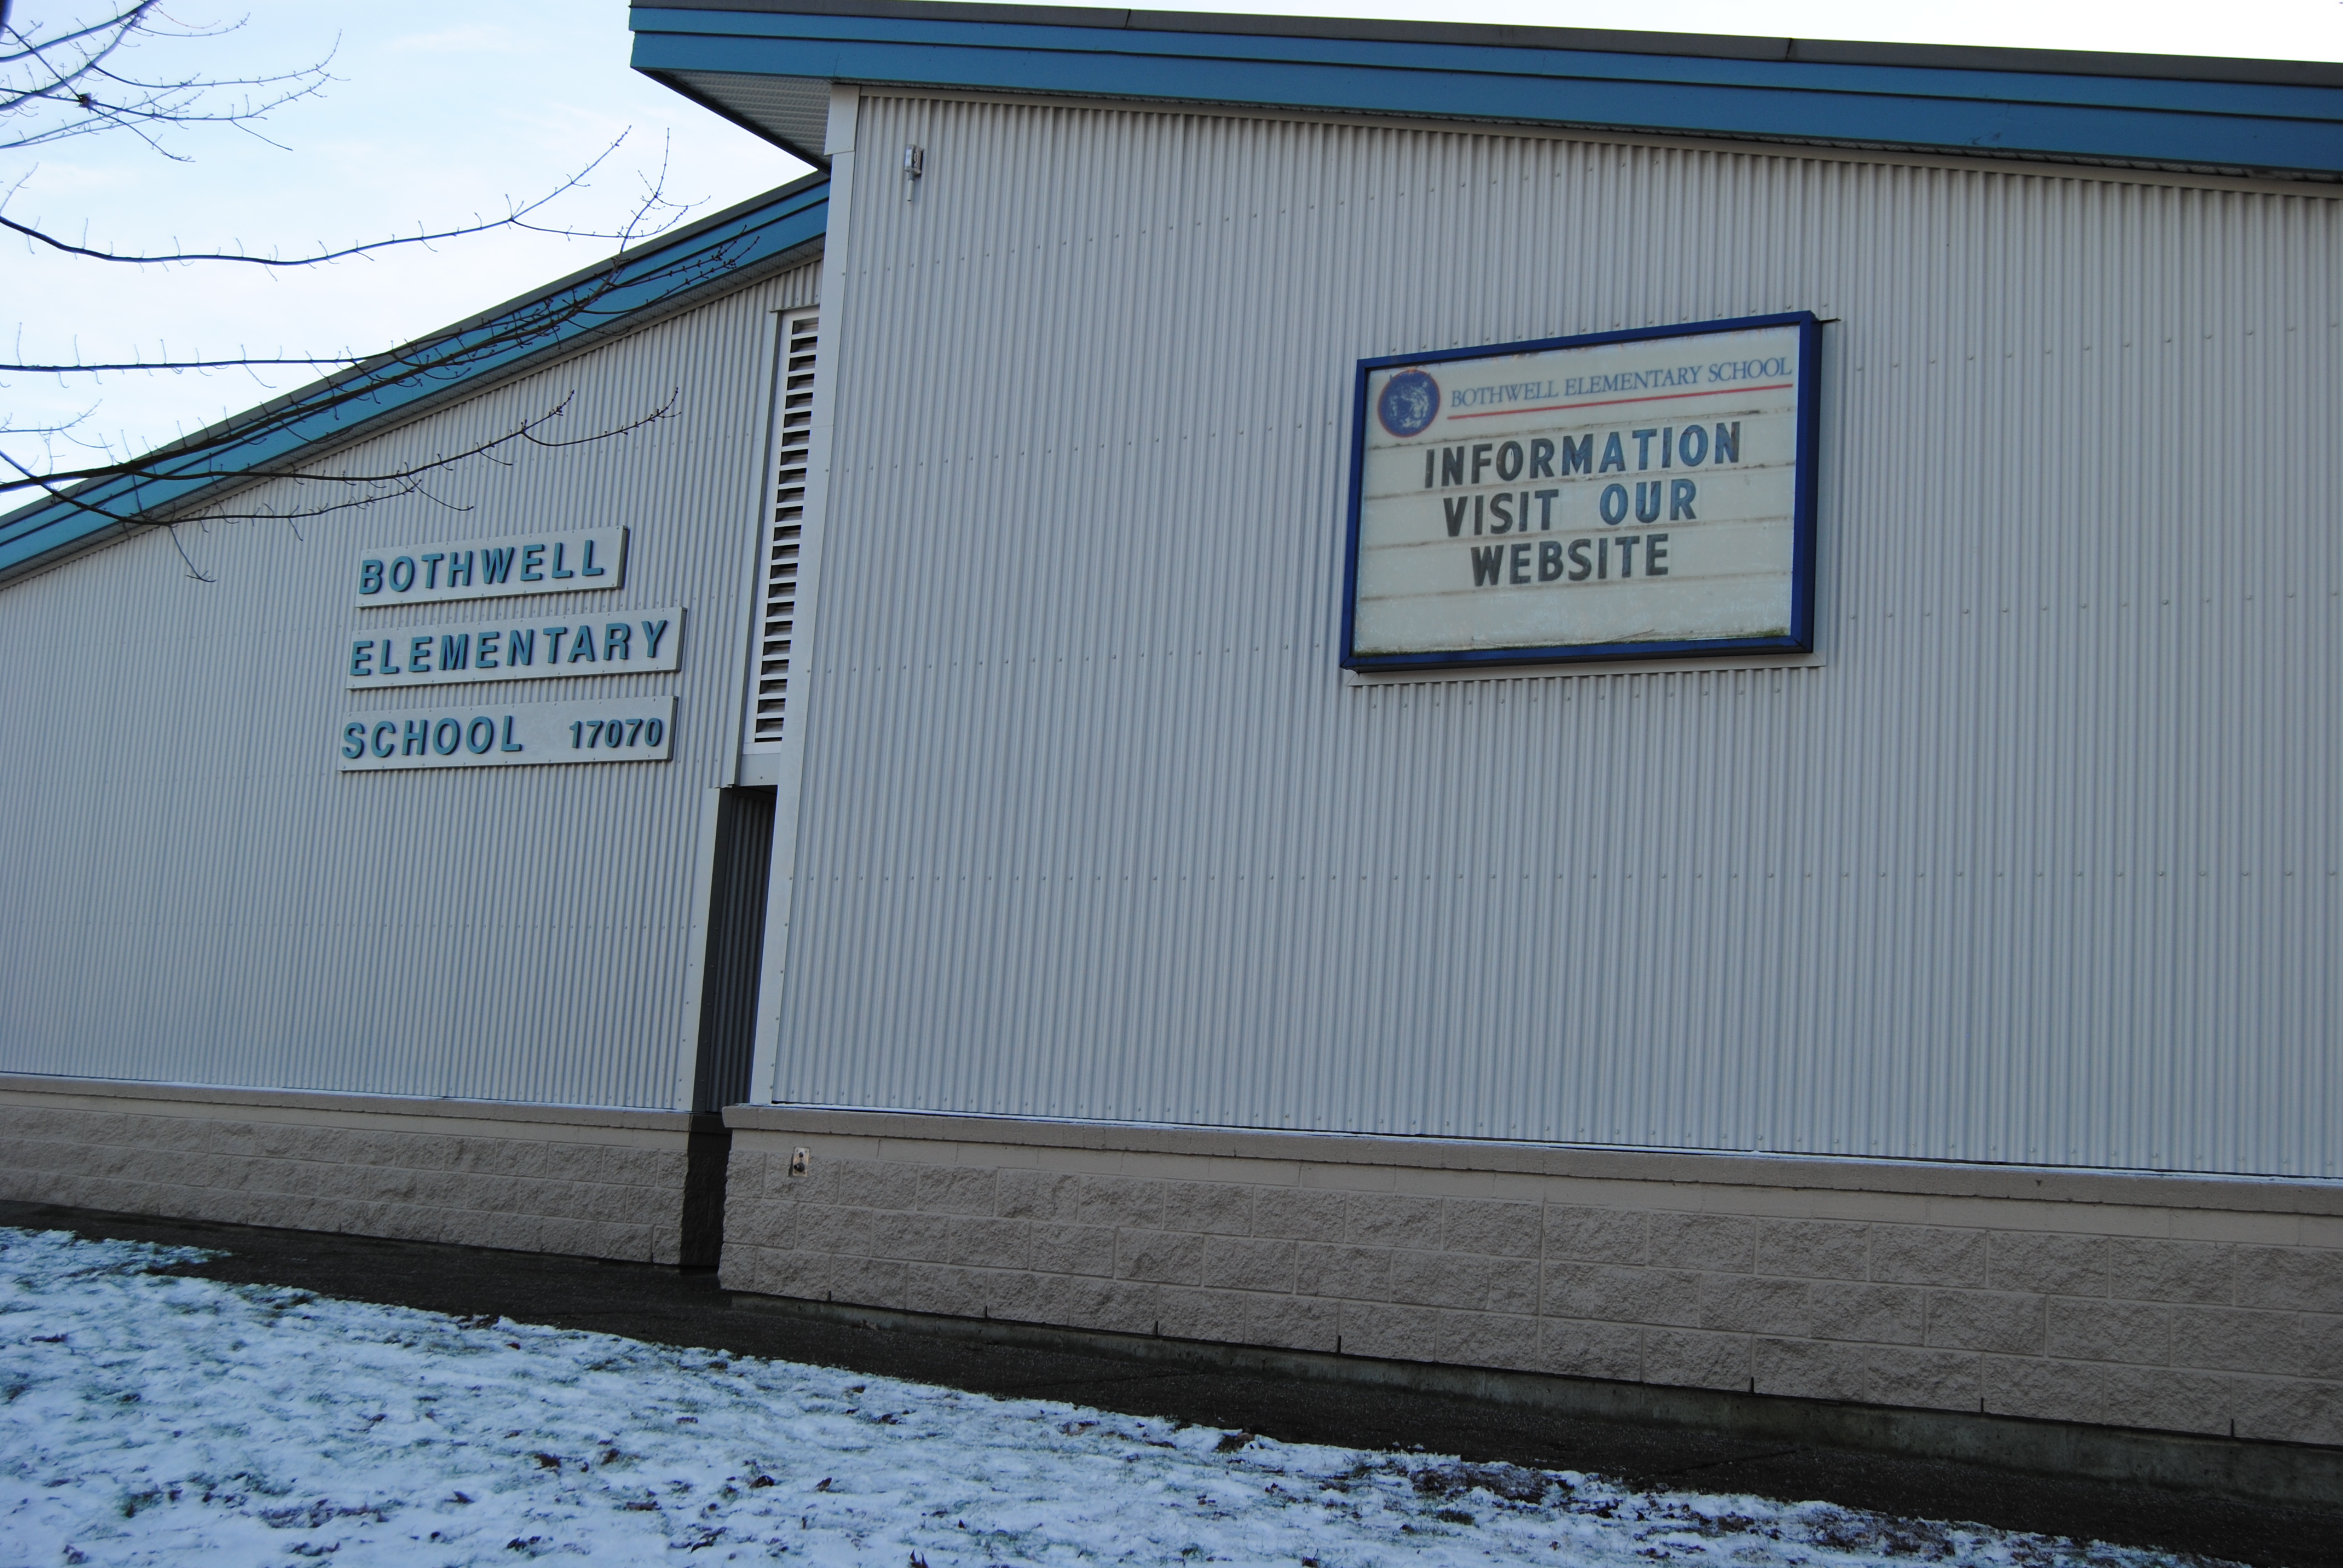 Bothwell Elementary